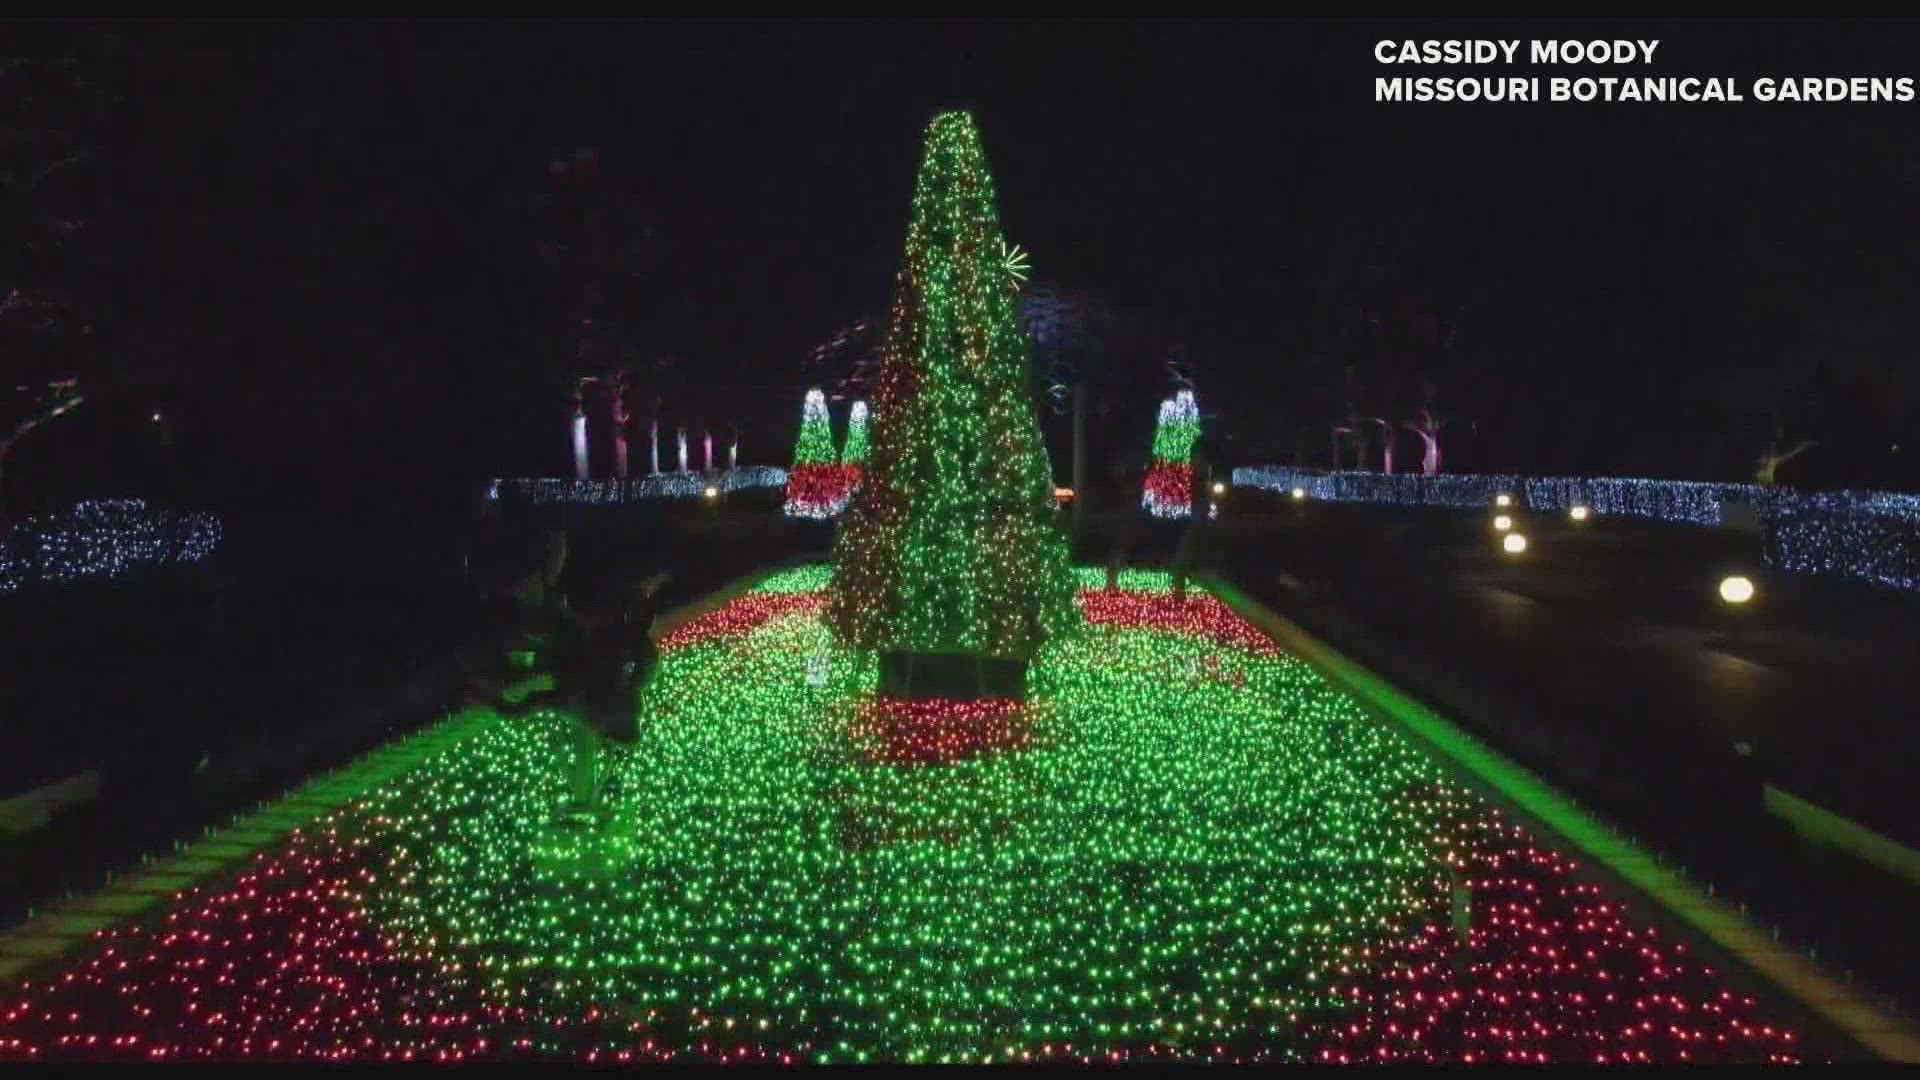 Two million lights adorn the gardens for the 10th annual Missouri Botantical Garden Glow.